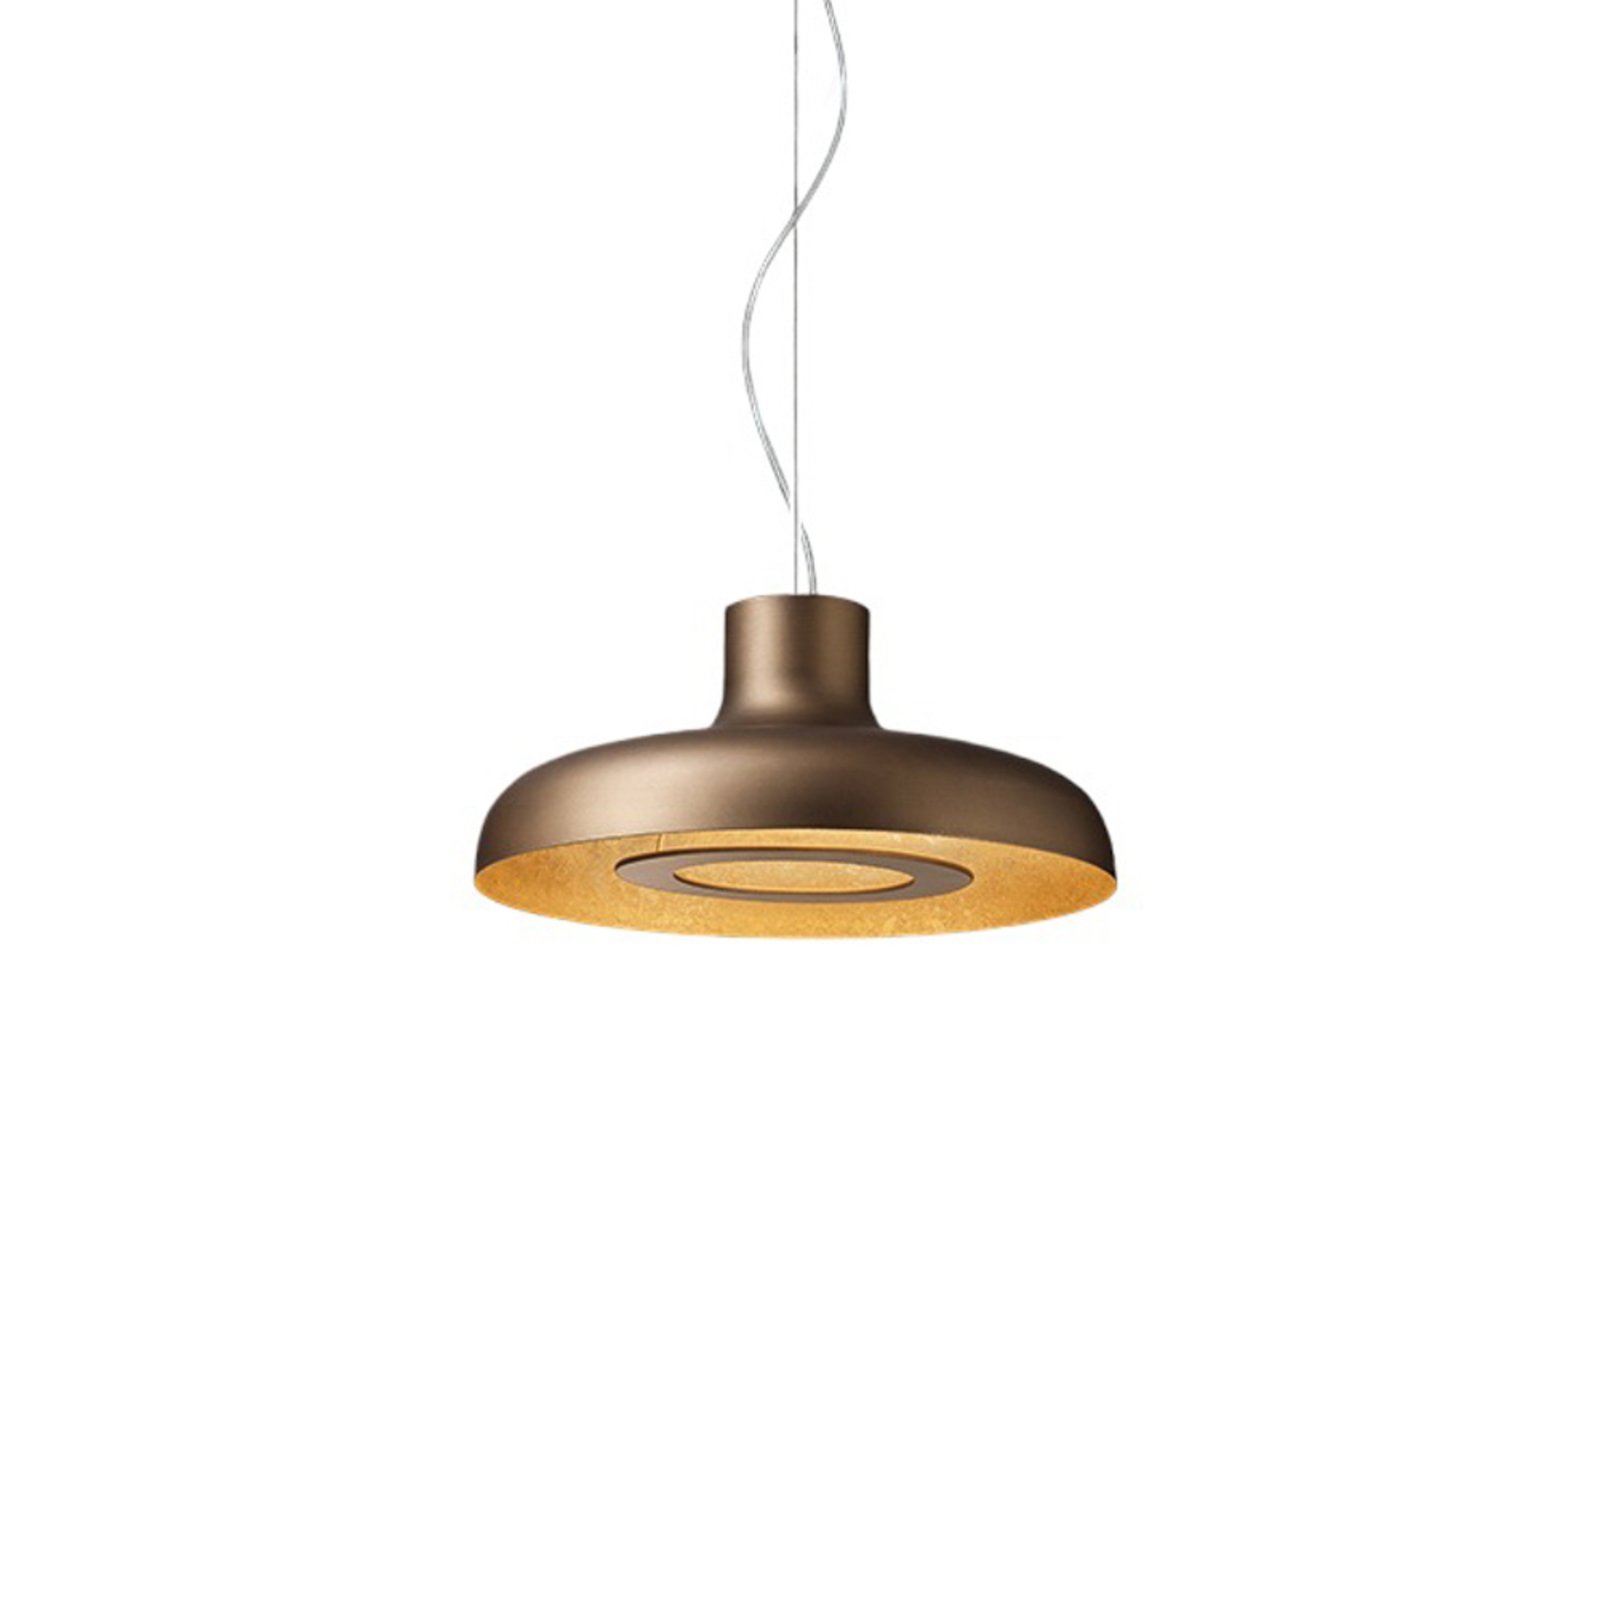 ICONE Duetto LED-es függőlámpa 927 Ø55cm bronz/arany